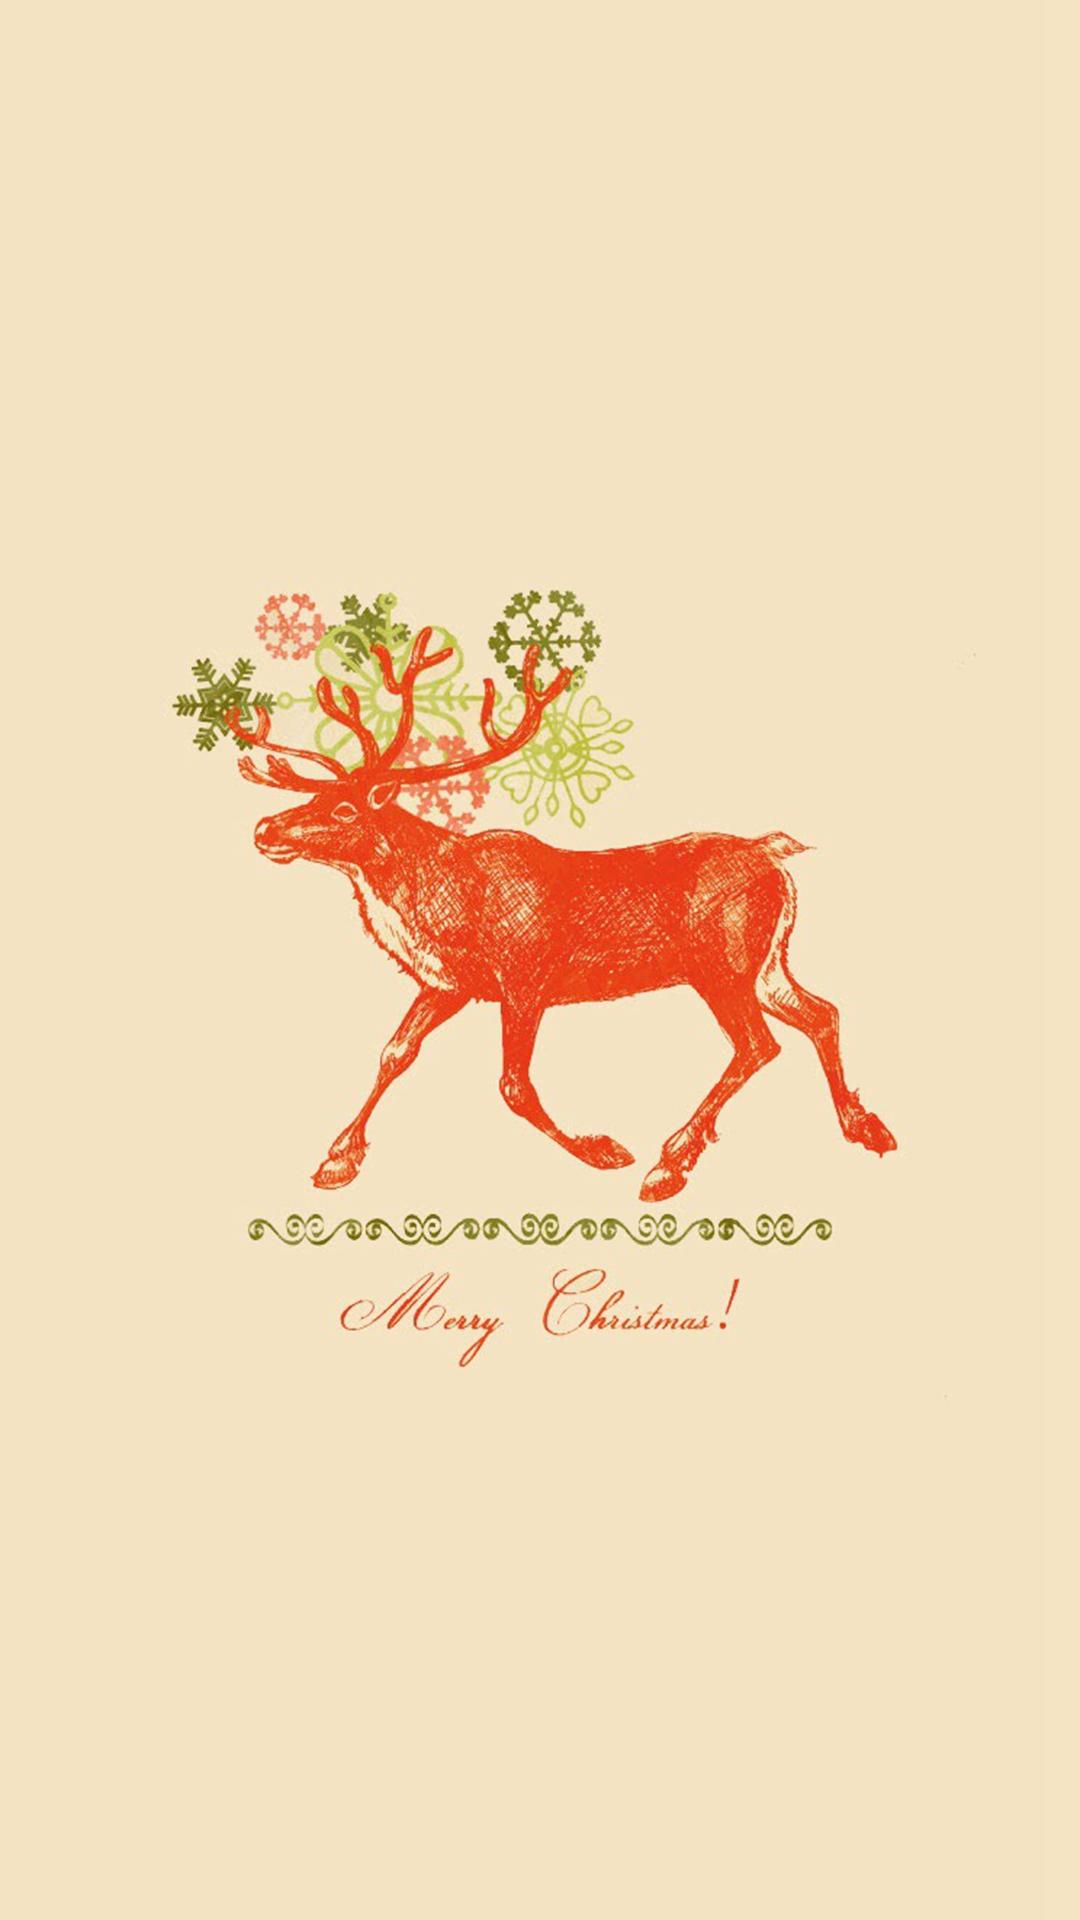 Merry Christmas Vintage Reindeer Illustration iPhone 8